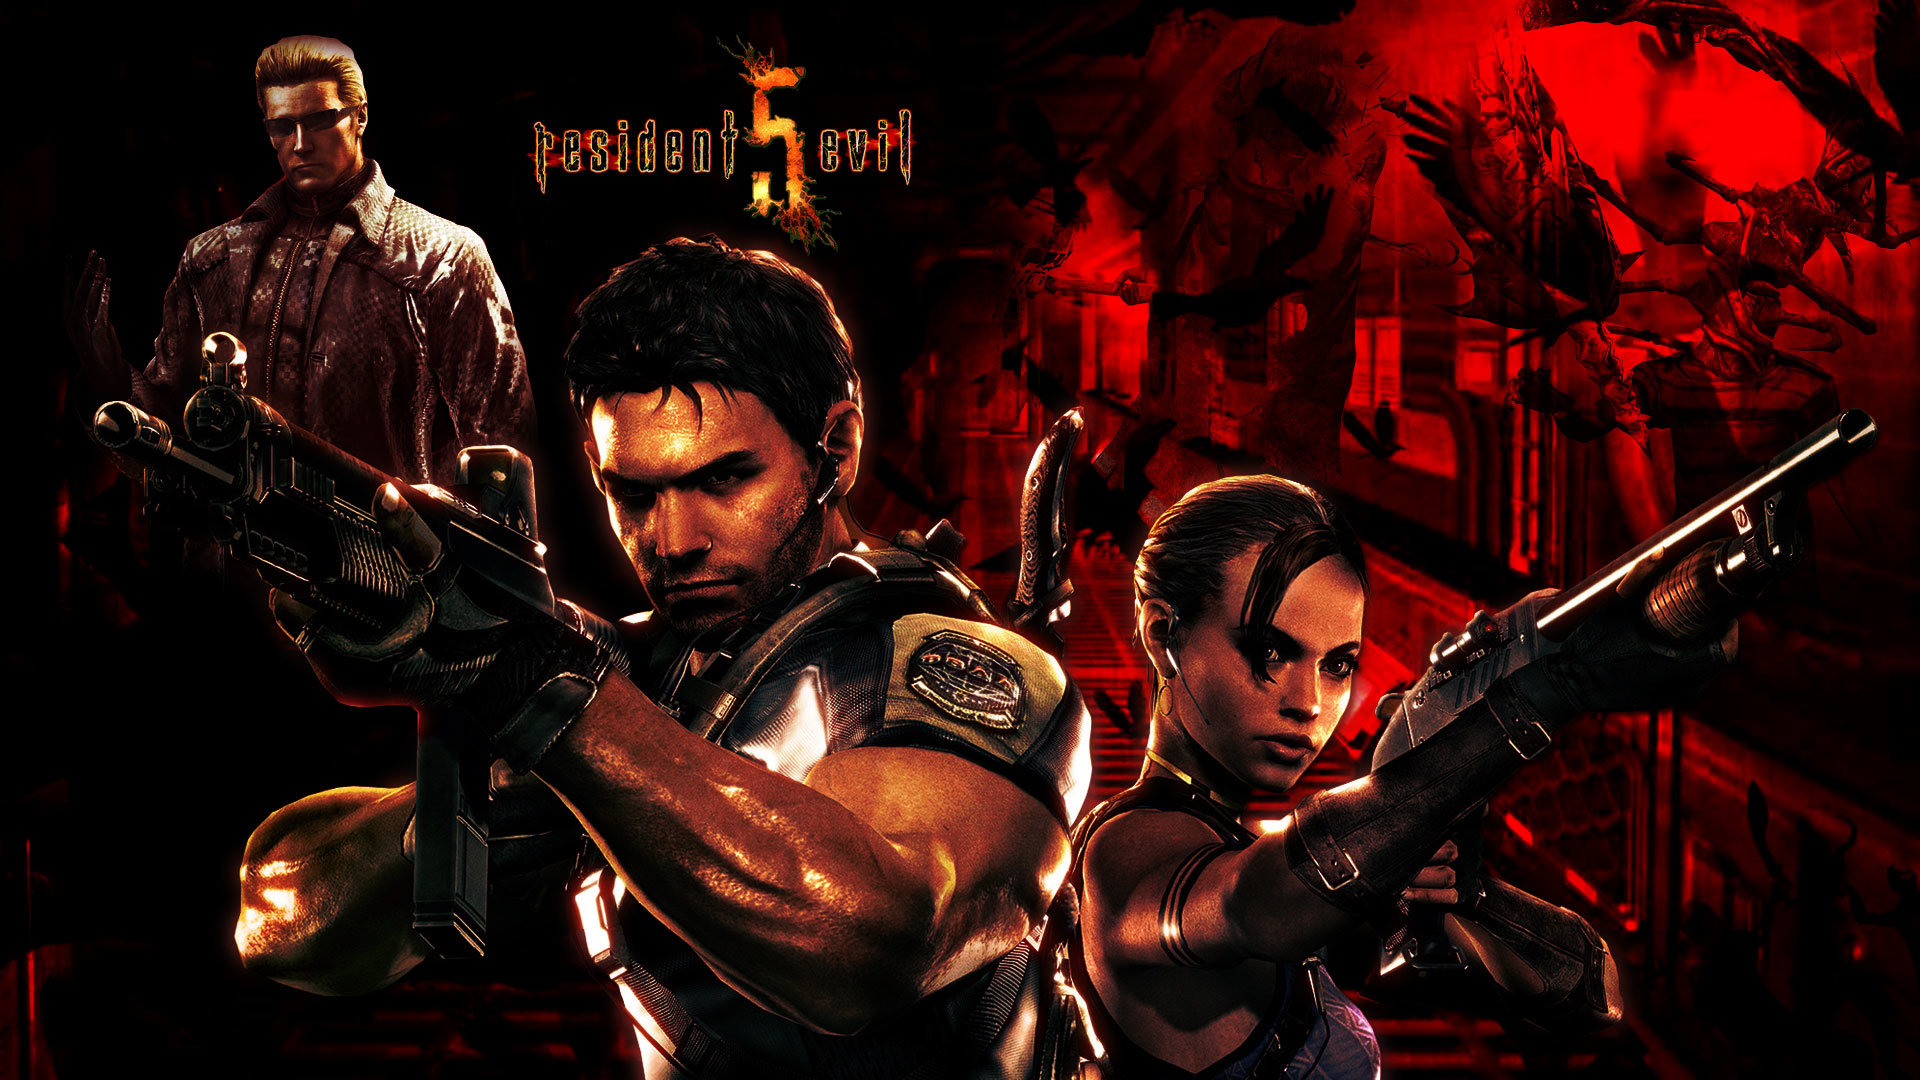  Resident  Evil  5 wallpapers  HD  for desktop backgrounds 